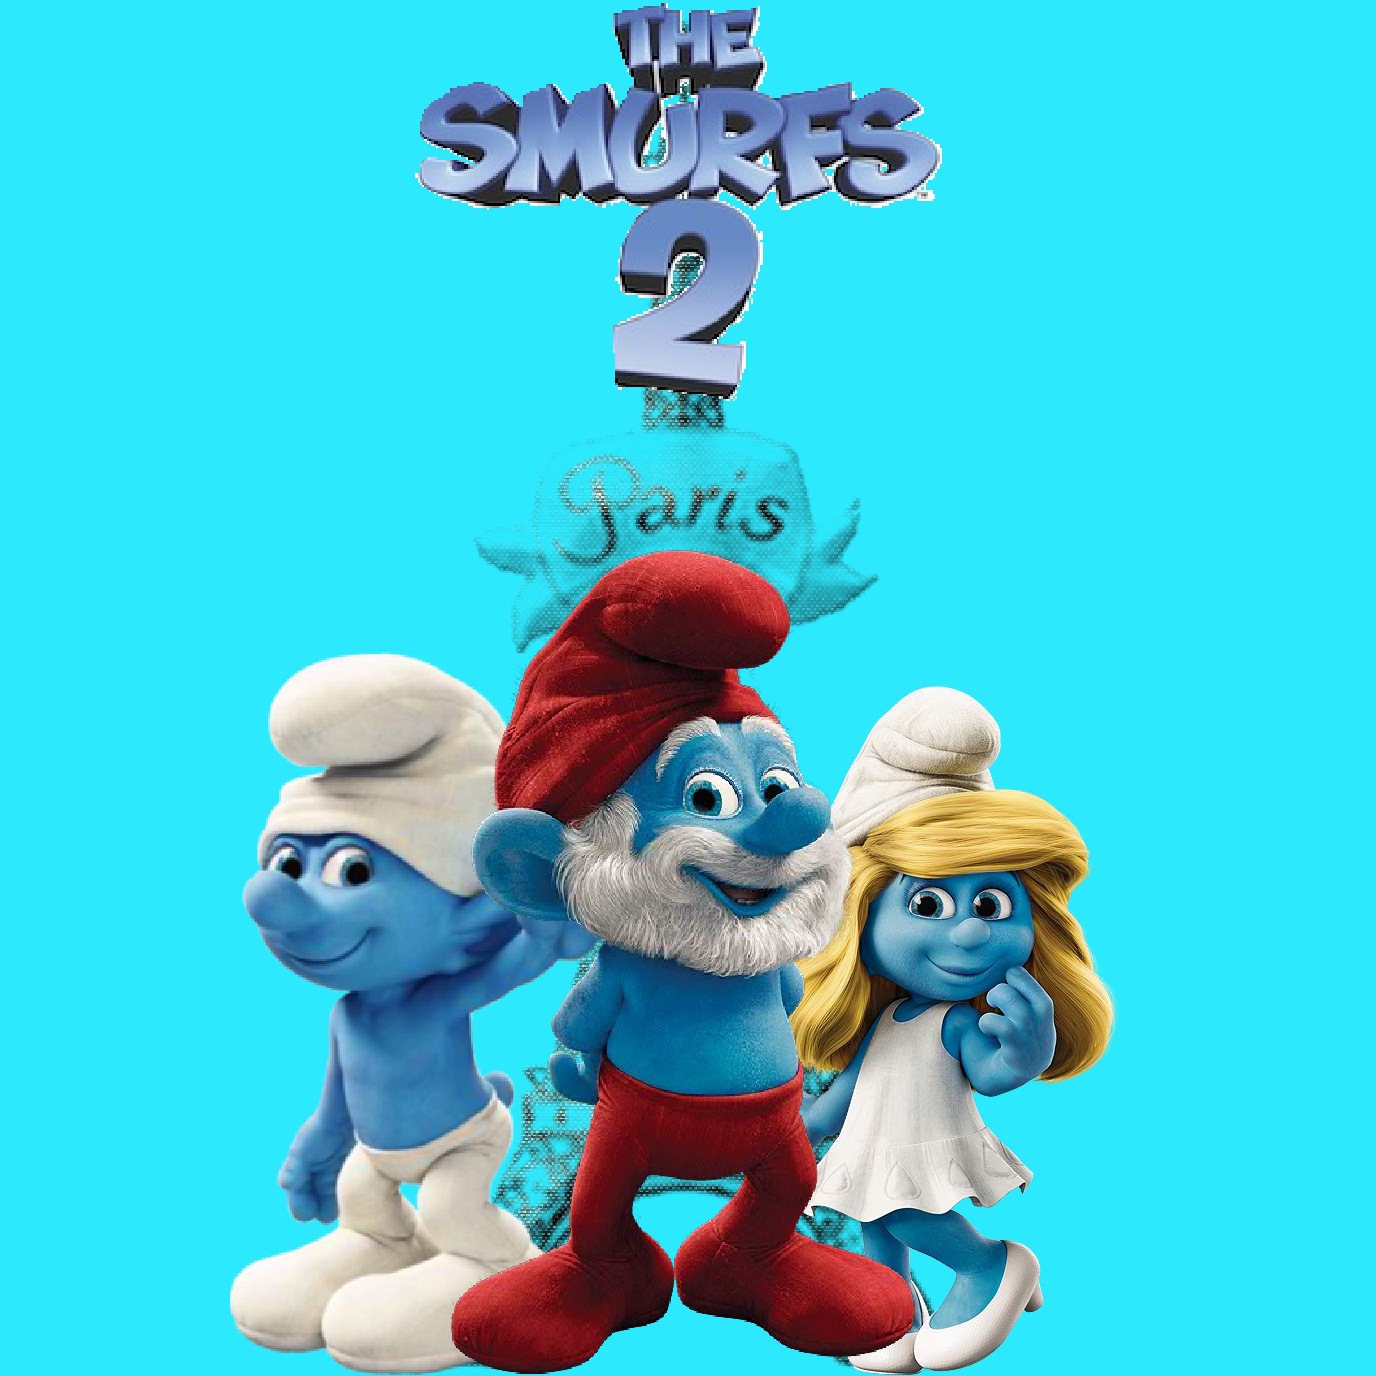 The Smurfs 2 Worlds International Poster - Smurfs Movie Poster - HD Wallpaper 